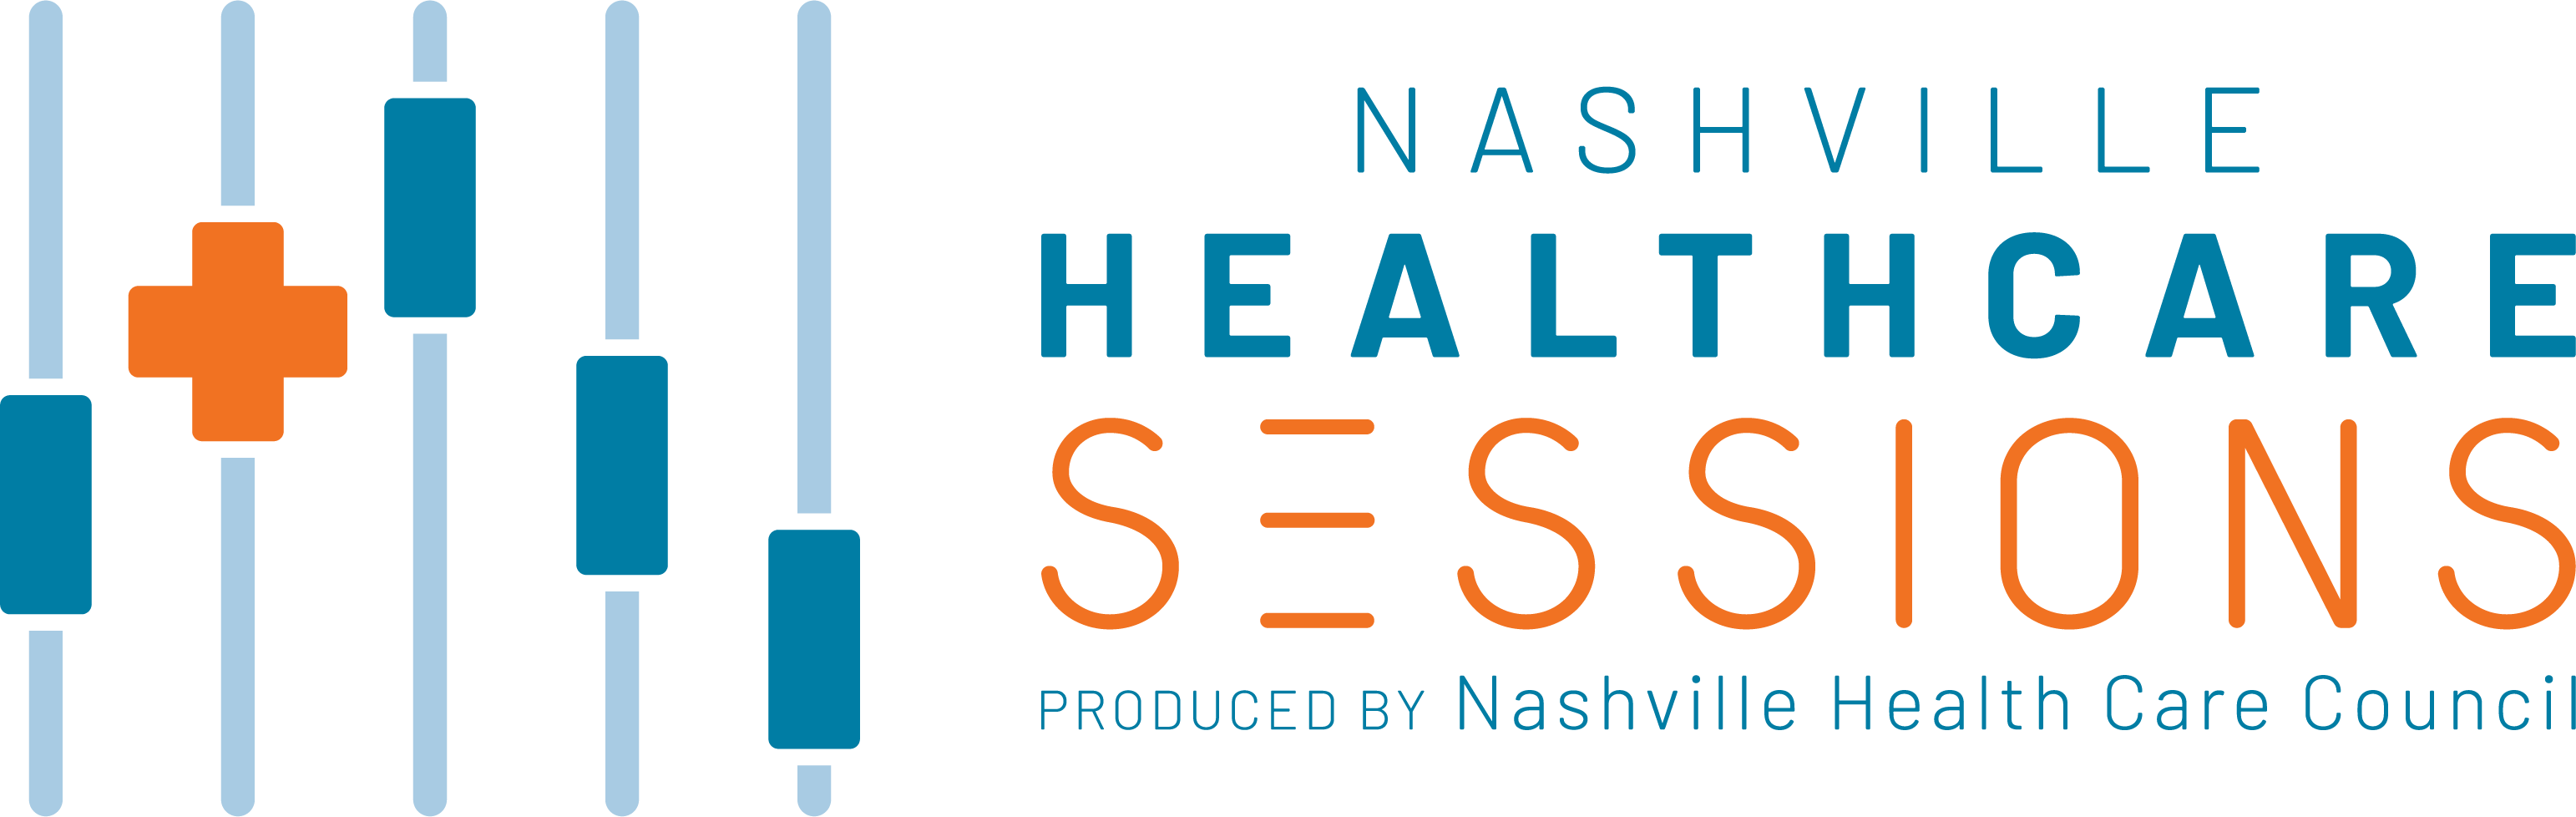 Nashville Health Care Council Announces Speakers, Agenda for Inaugural Nashville Healthcare Sessions Conference